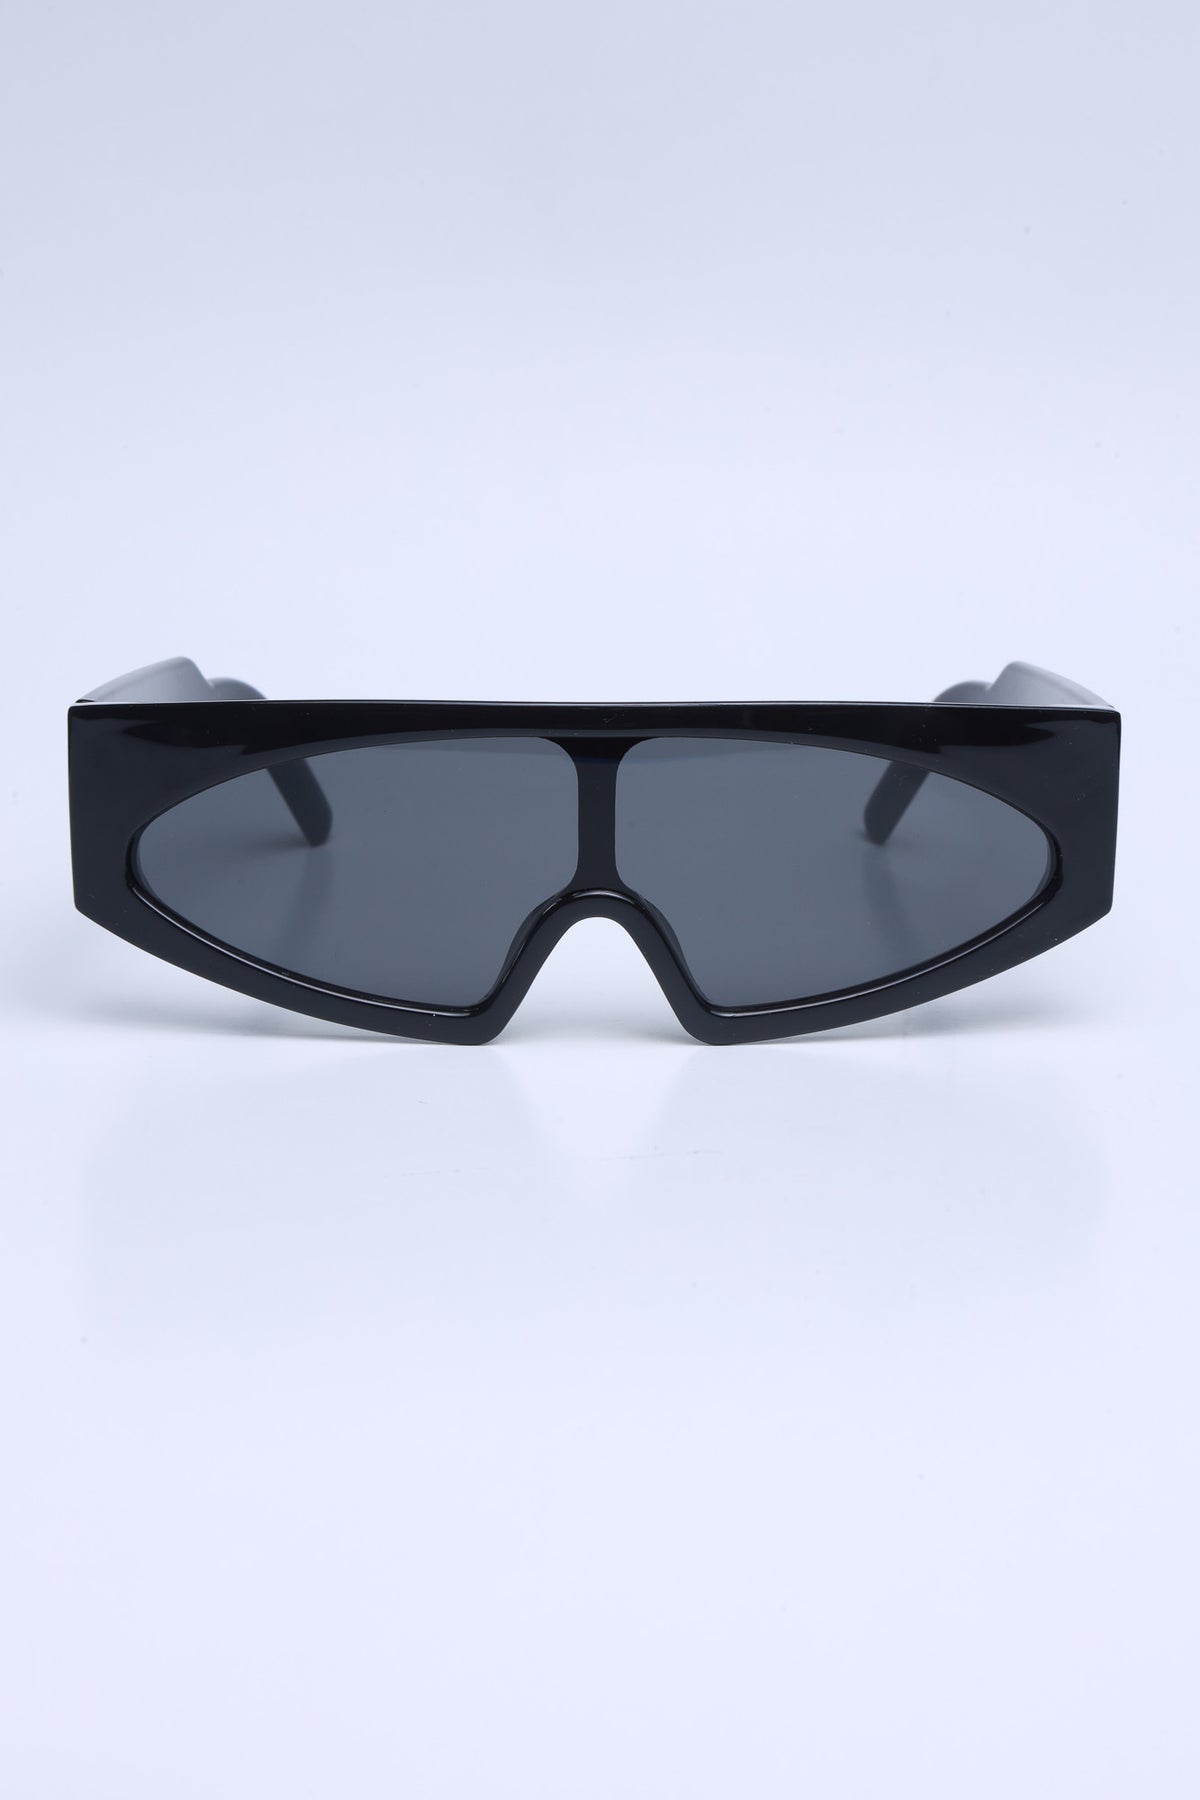 
              Bright Eyes Square Shield Sunglasses - Black/Black - Swank A Posh
            